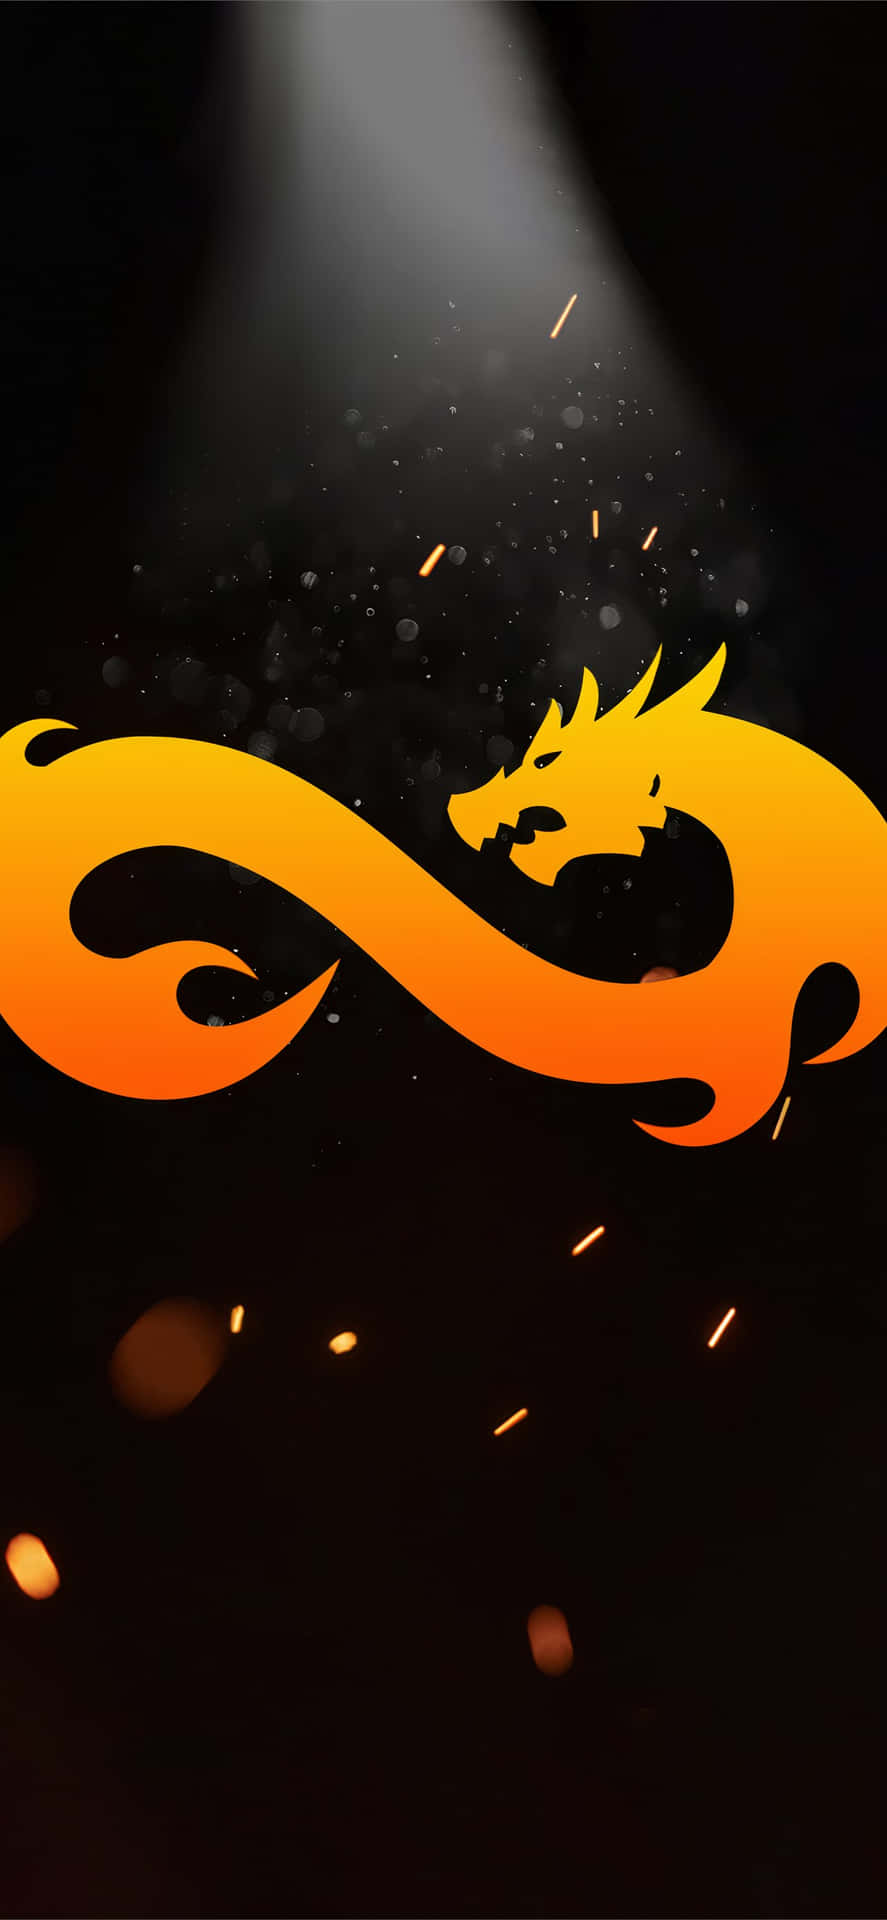 Androidcounter-strike Global Offensive Orange Dragon Logo Bakgrund